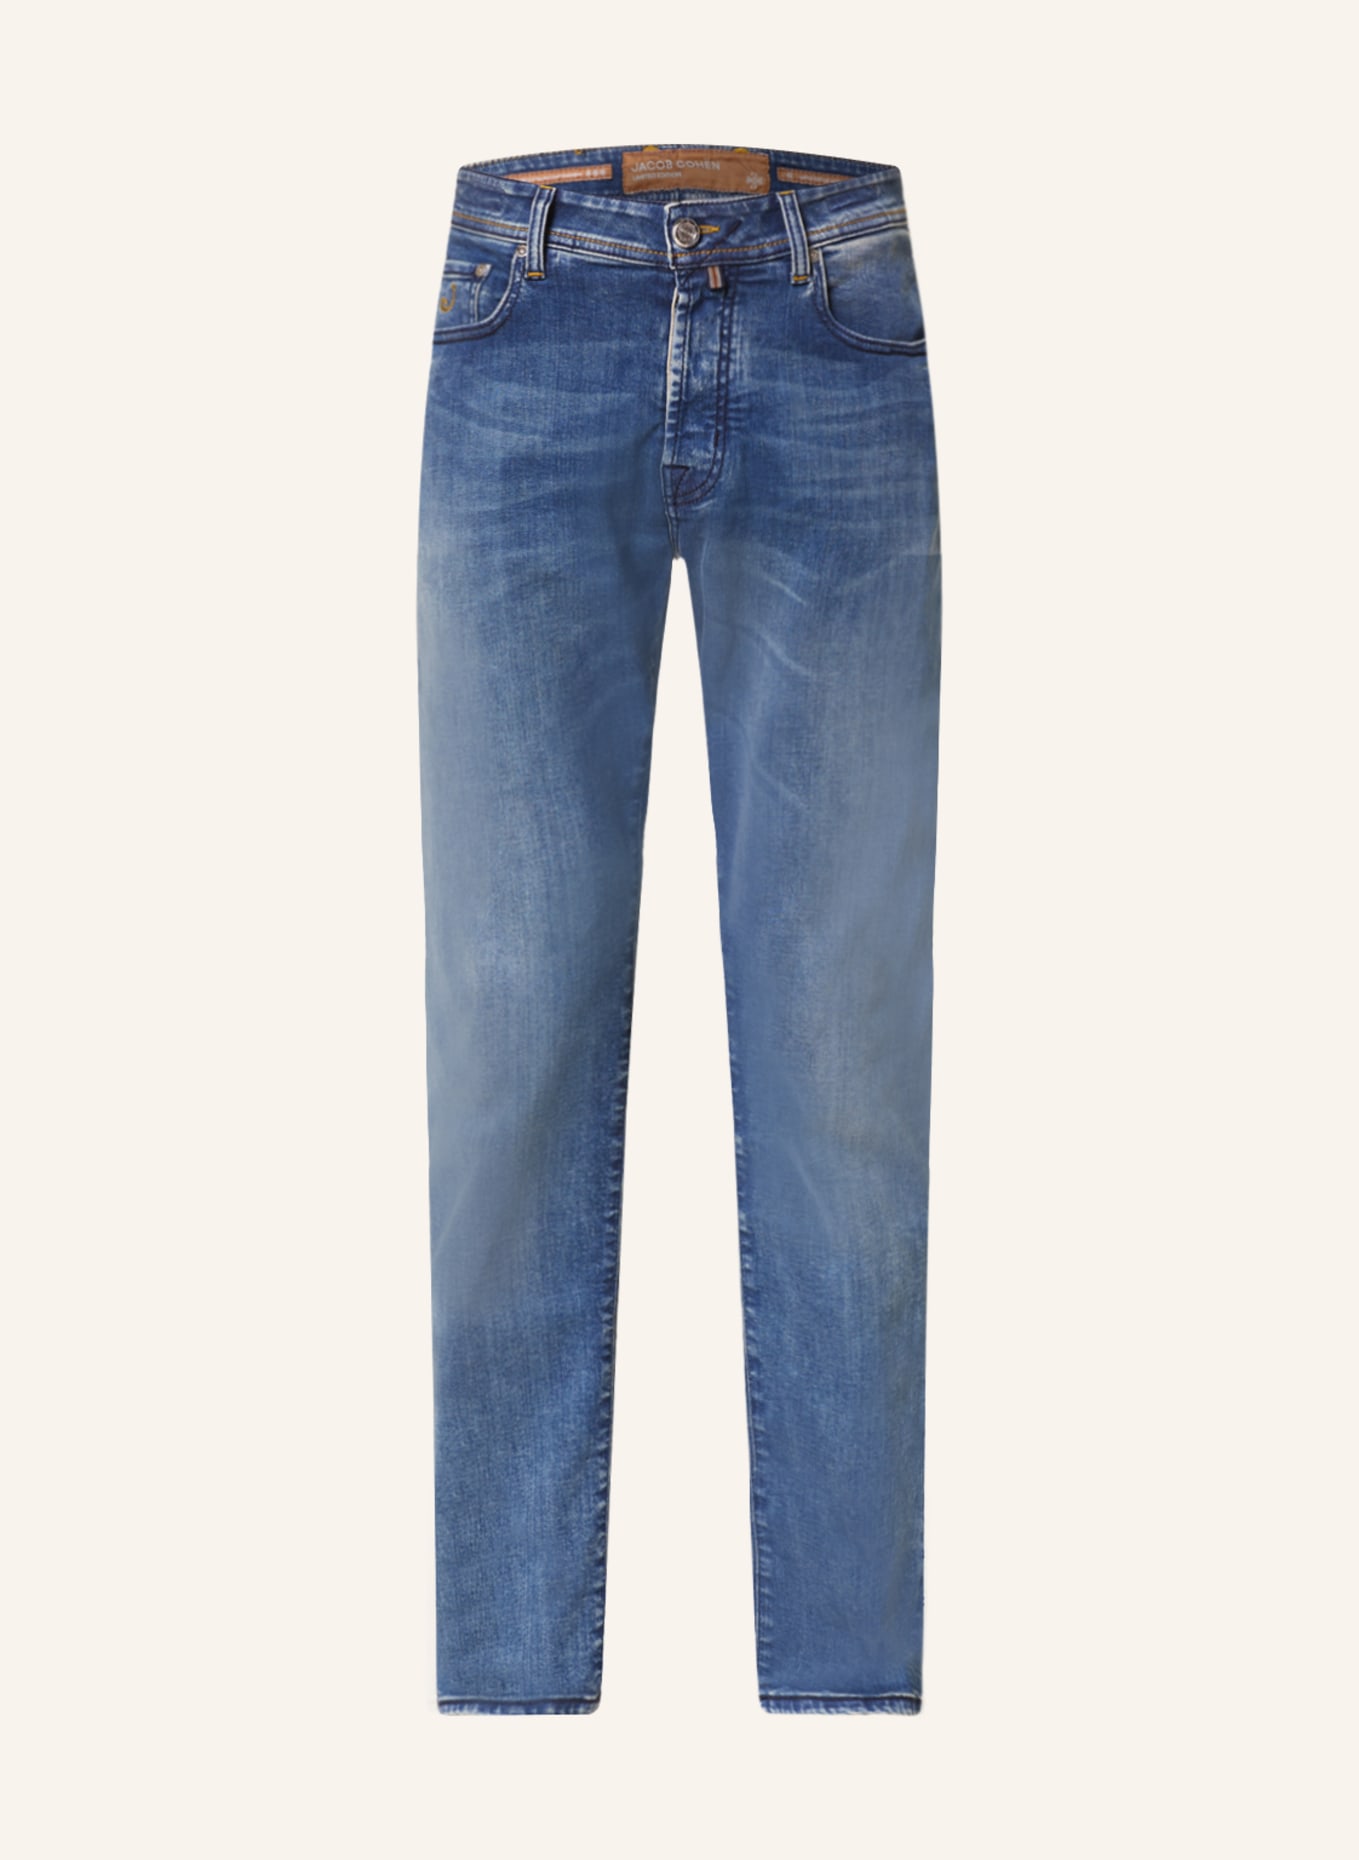 JACOB COHEN Jeans BARD LIMITED Regular Fit, Farbe: 552D Mid Blue Vintage (Bild 1)